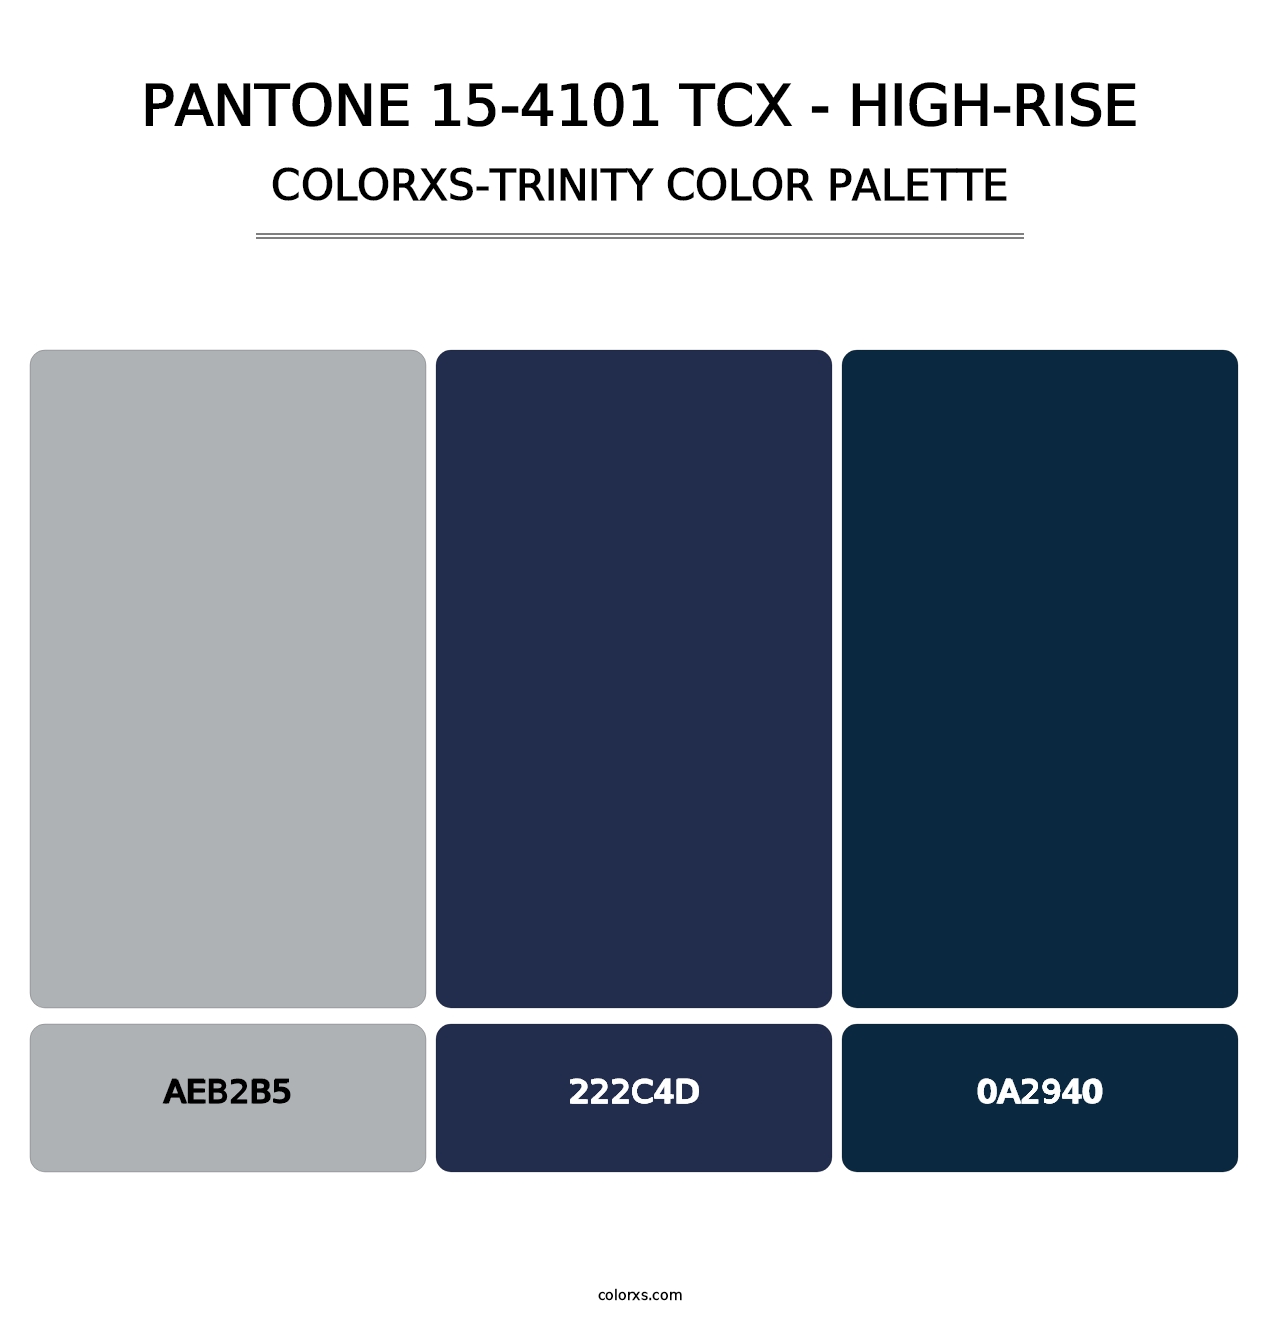 PANTONE 15-4101 TCX - High-rise - Colorxs Trinity Palette